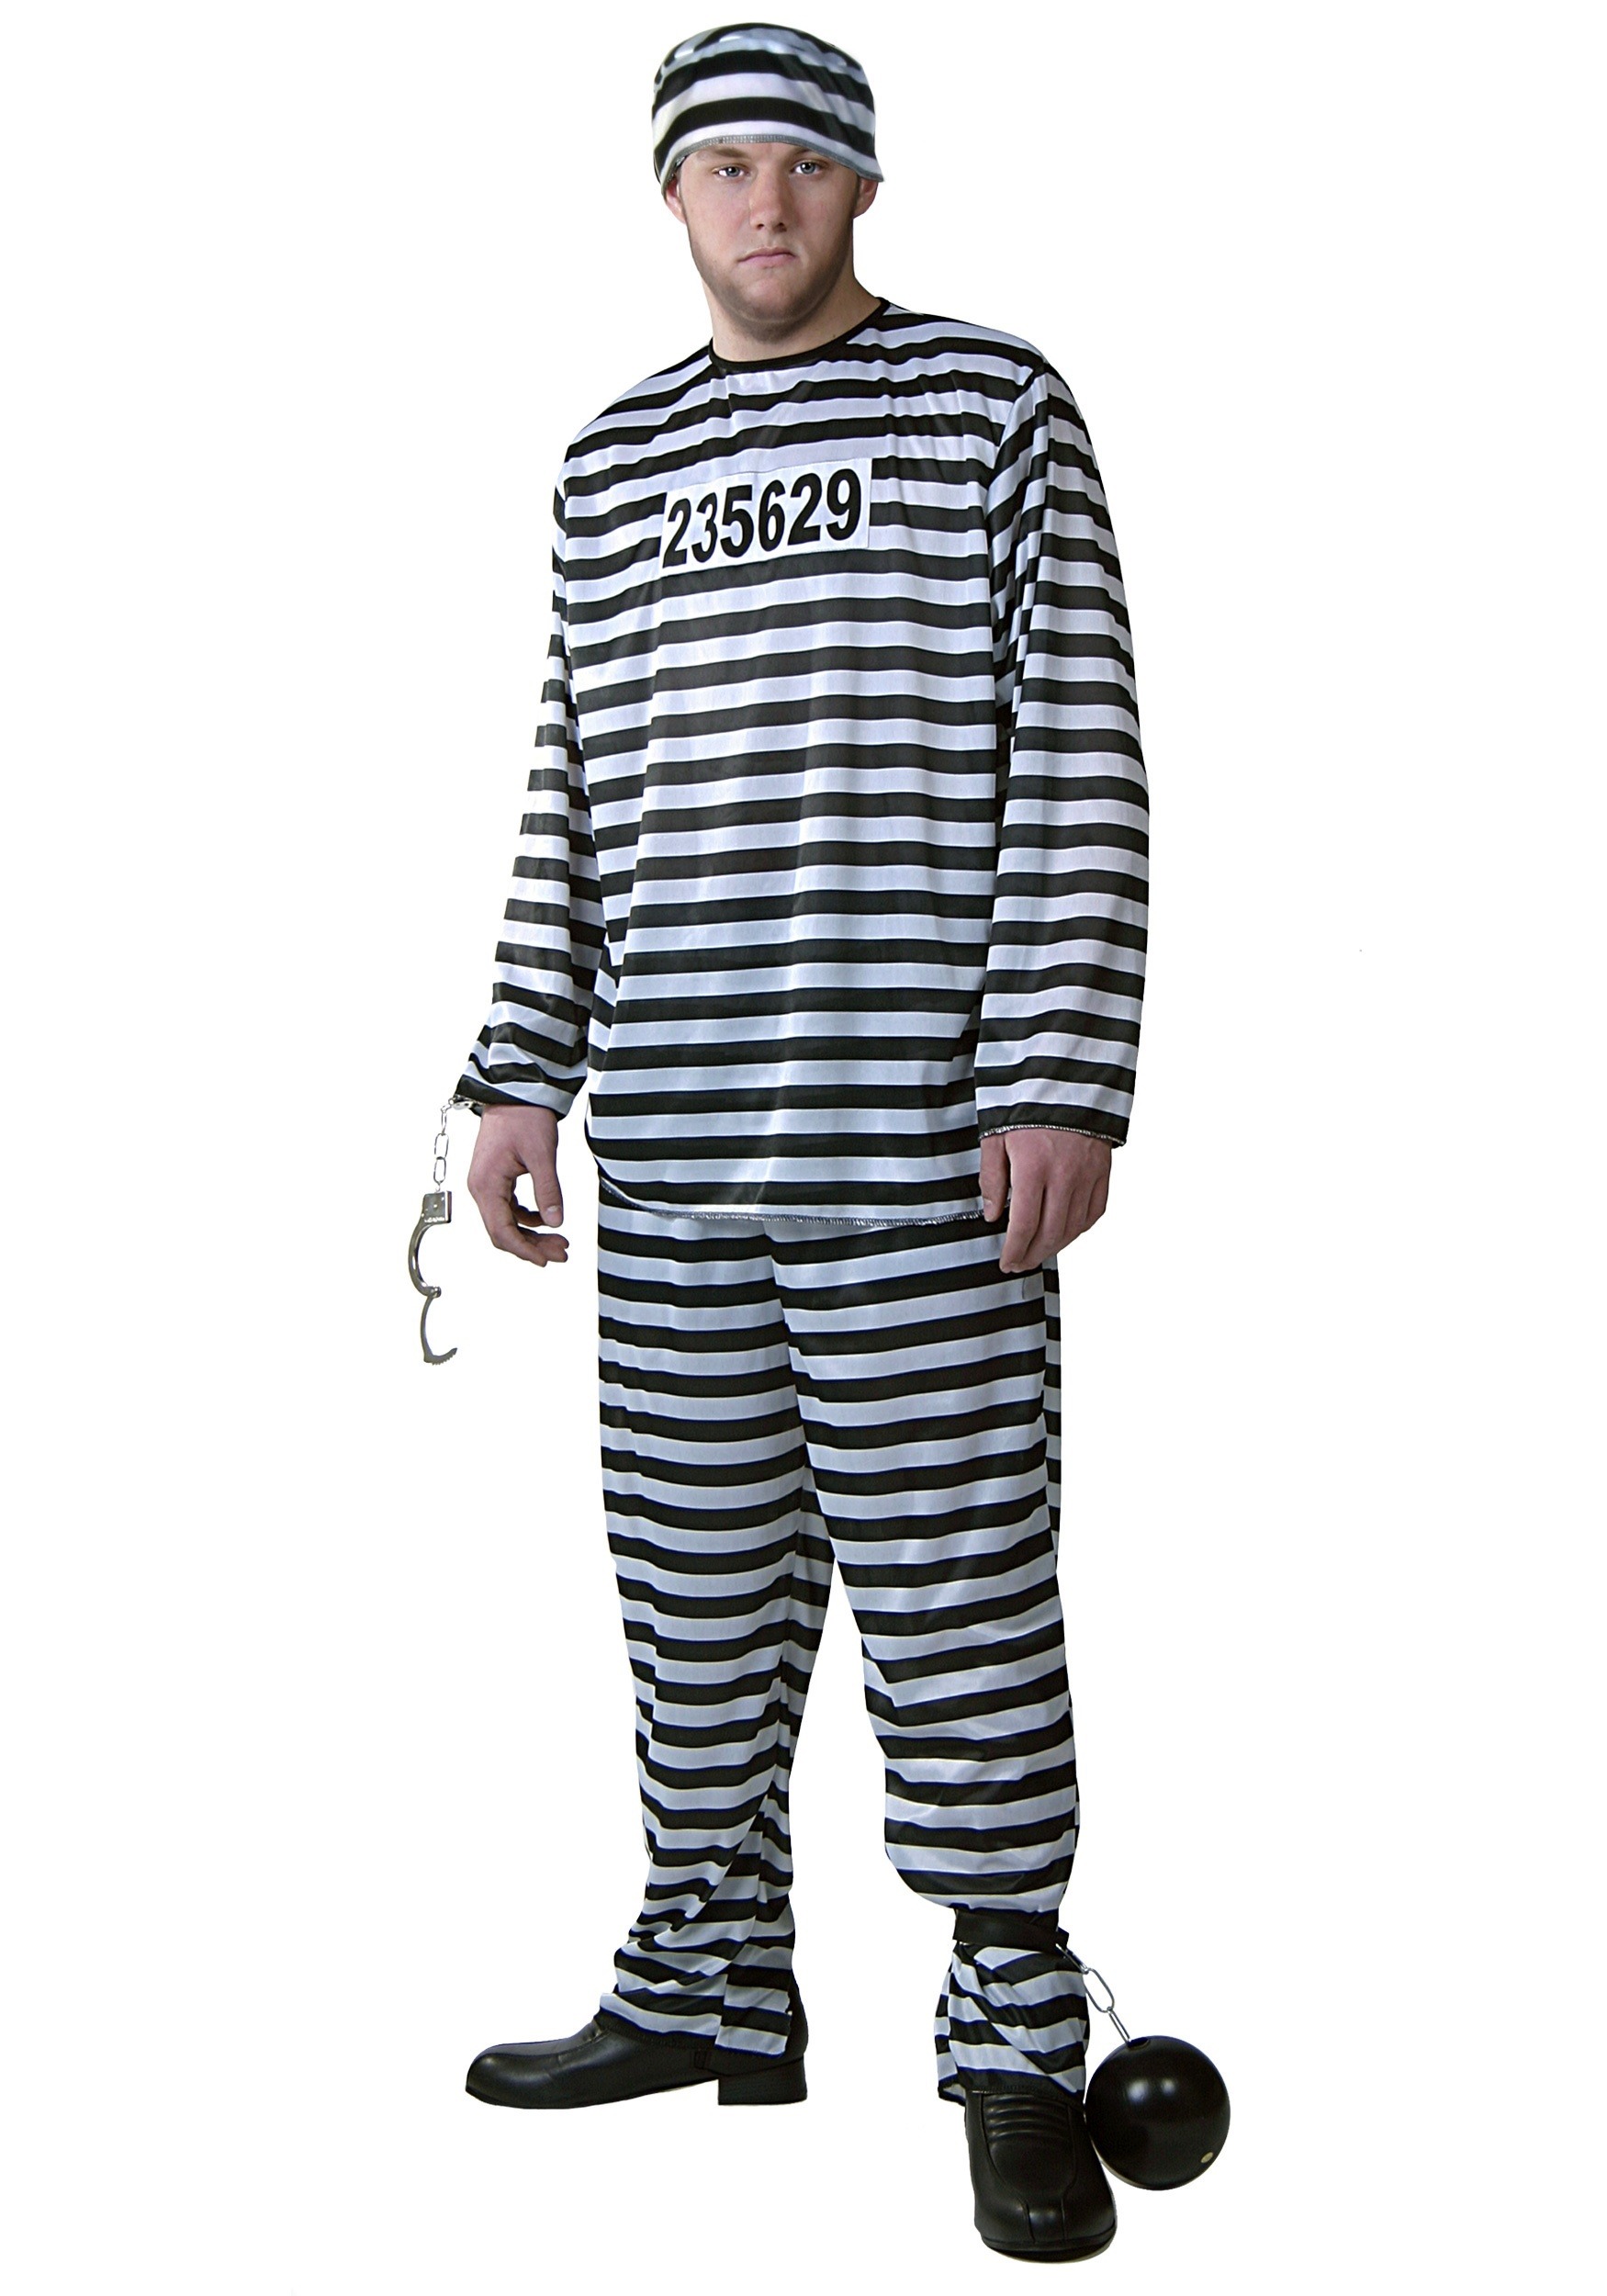 Plus Size Prisoner Costume for Men | Halloween Costume